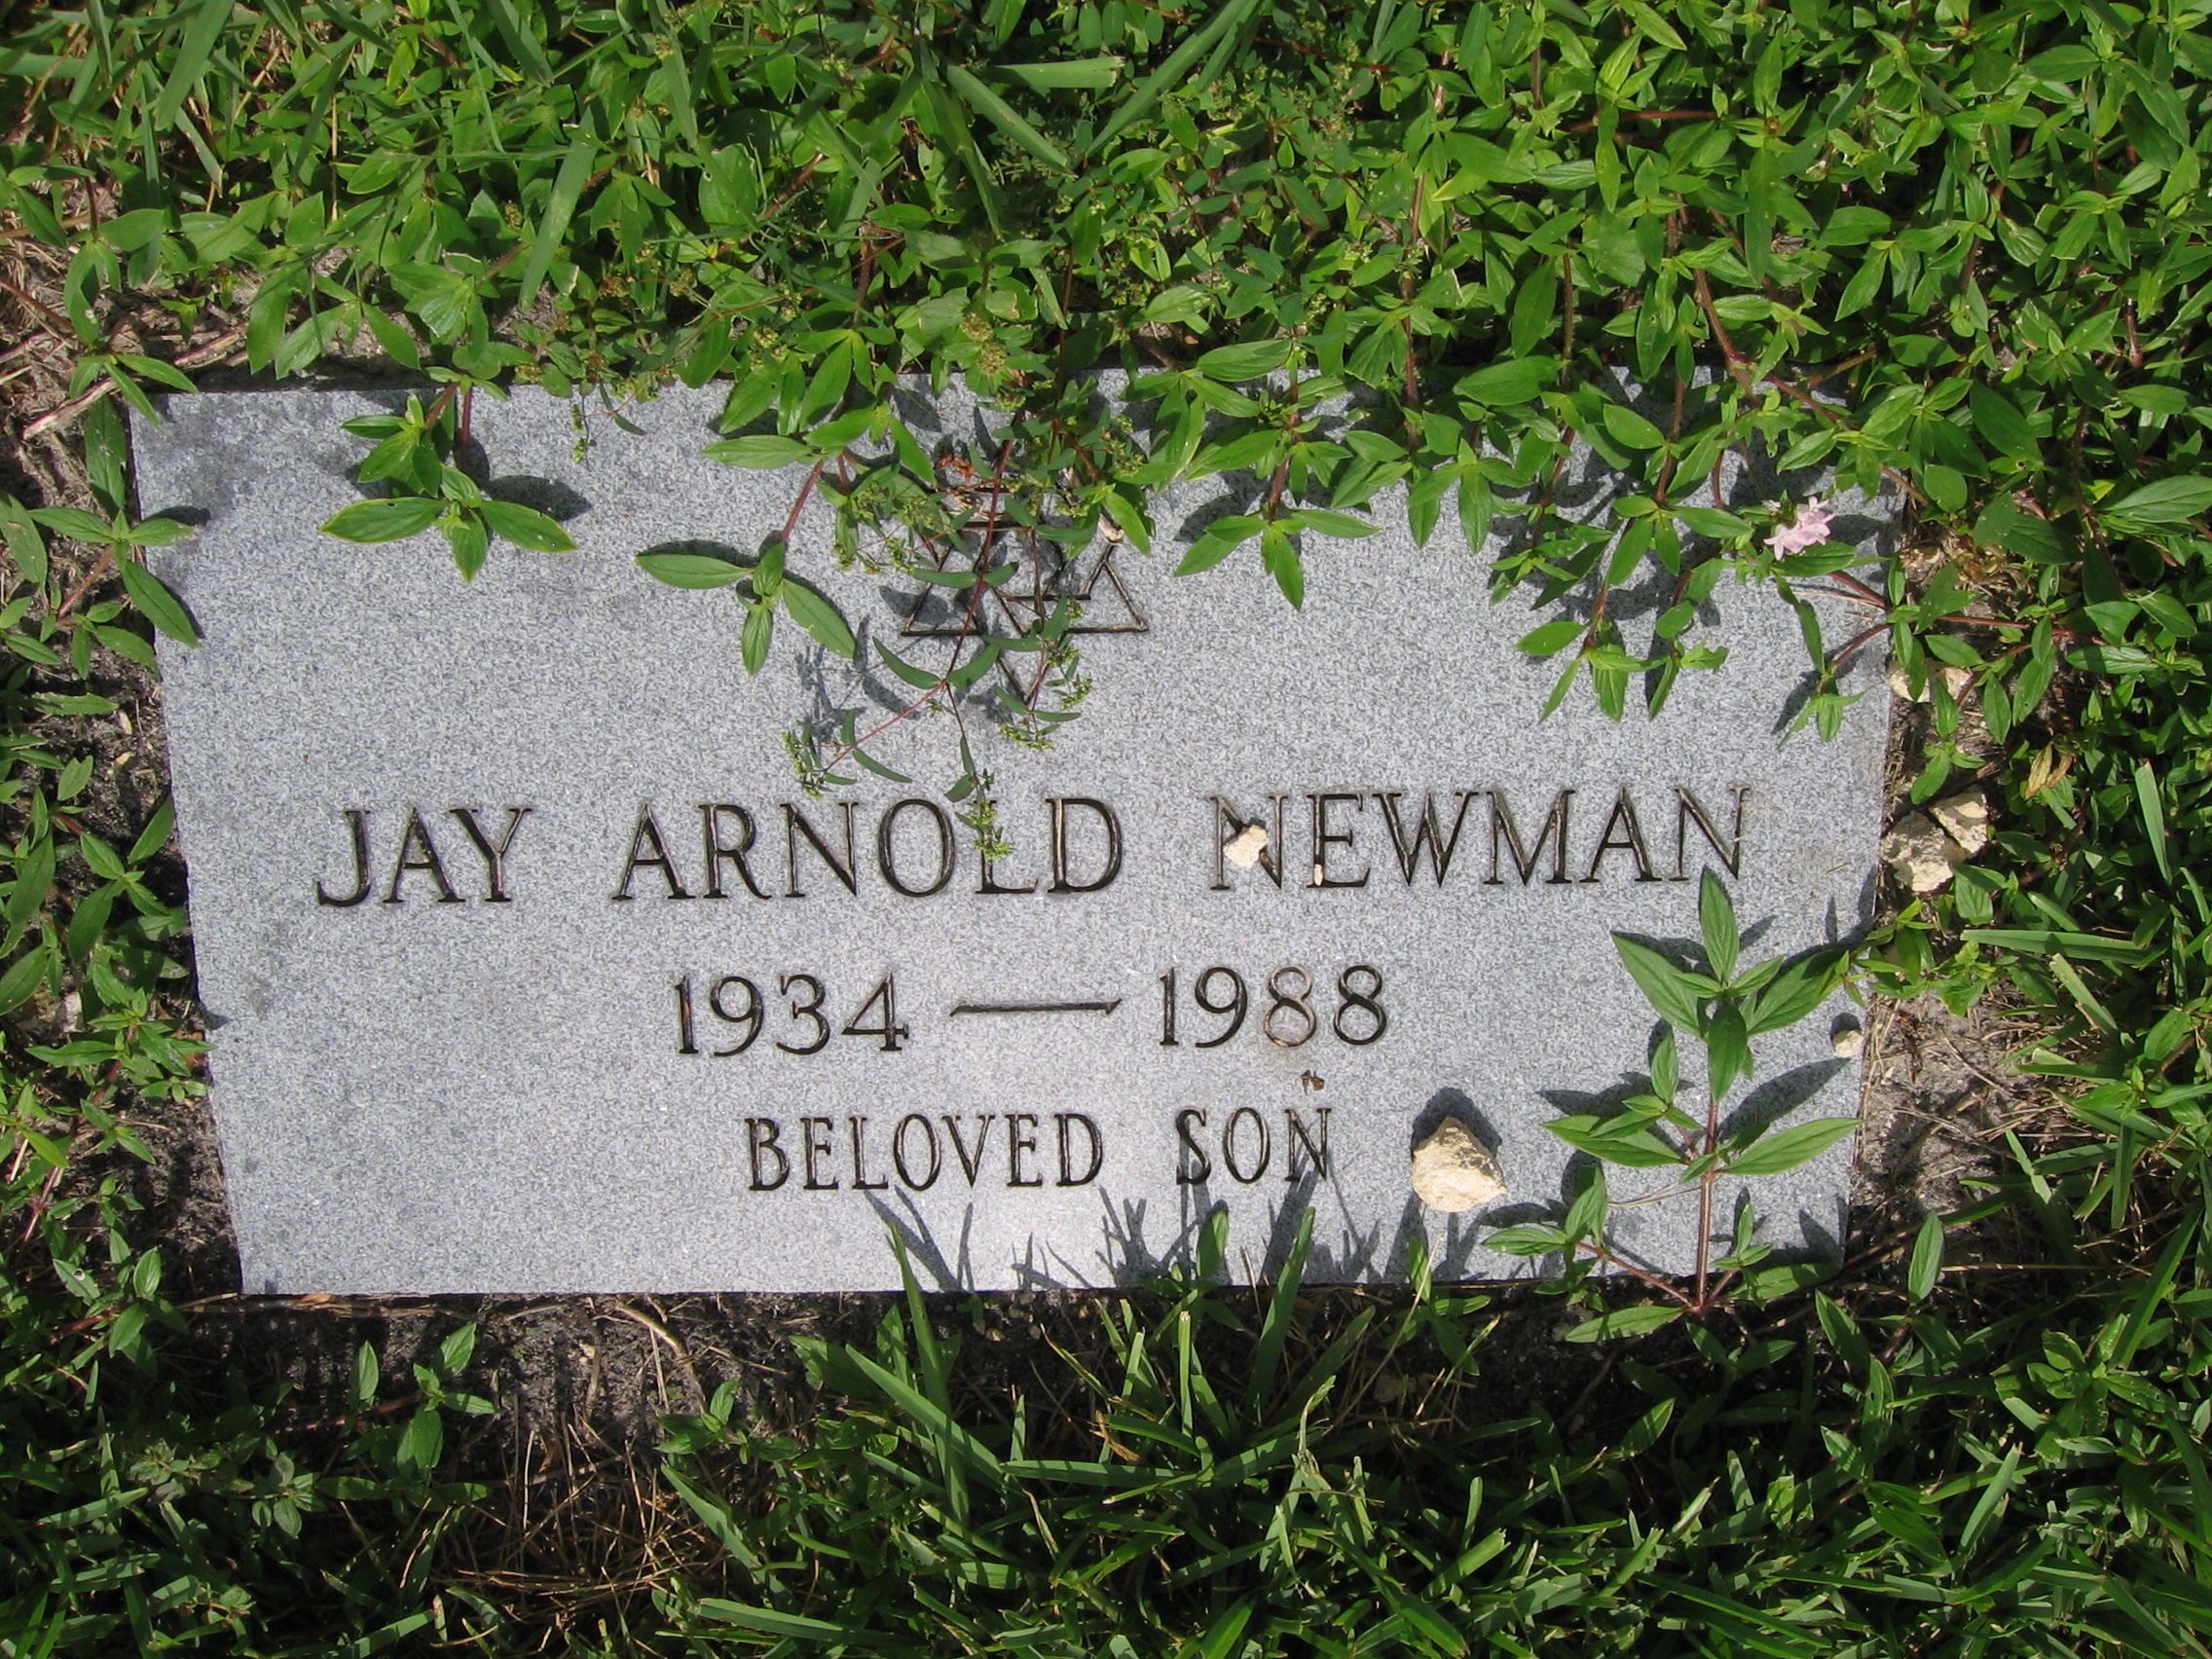 Jay Arnold Newman